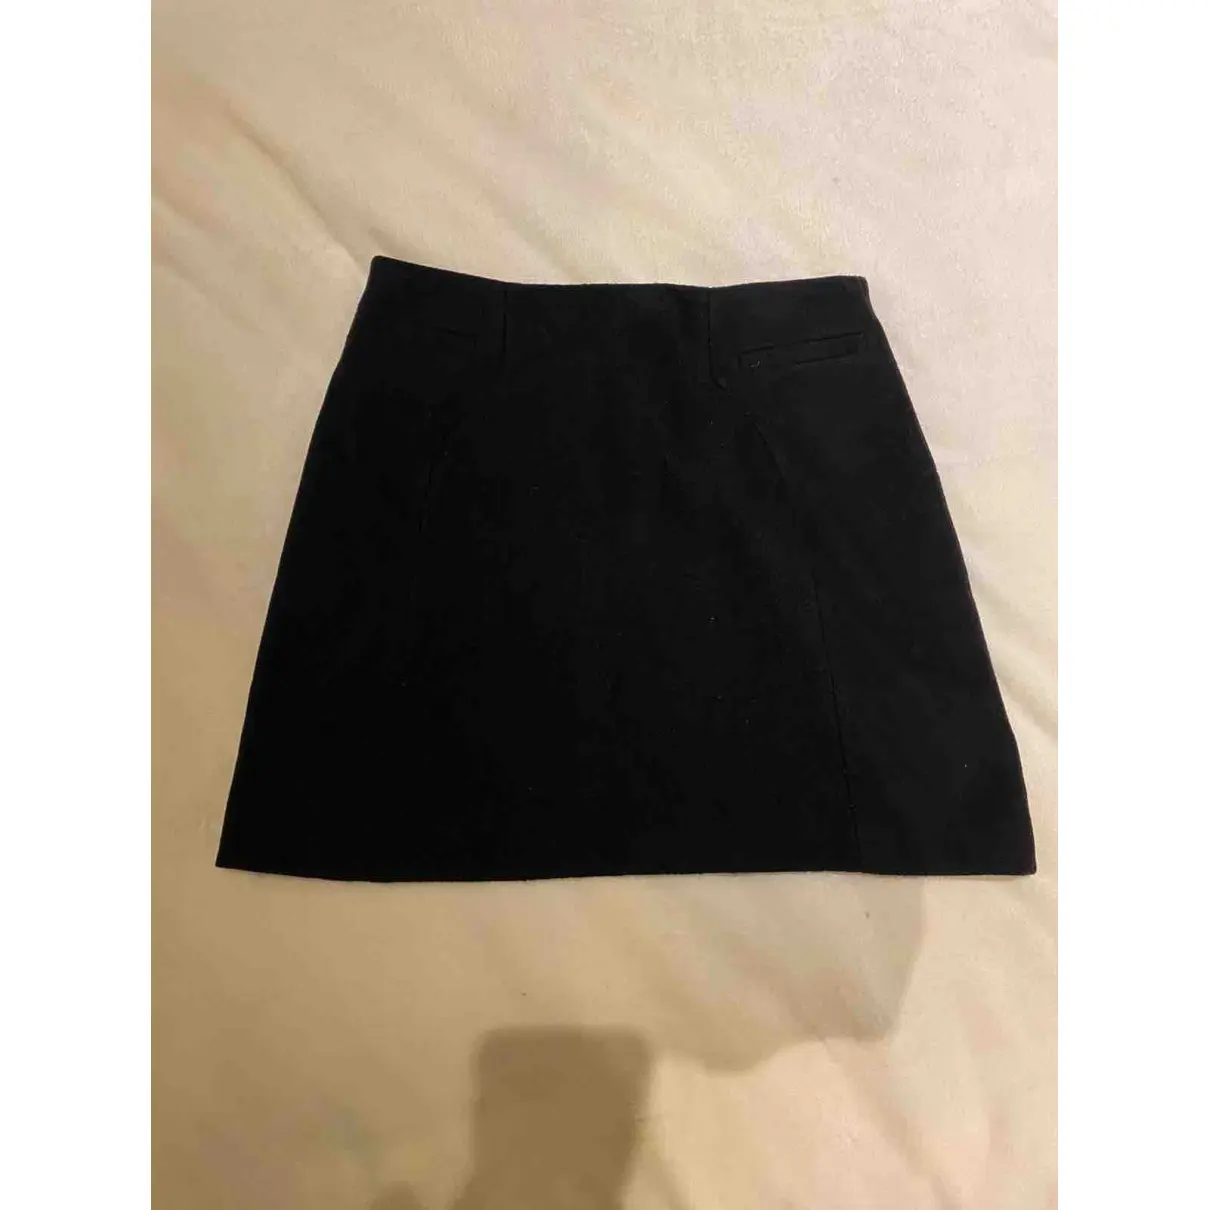 Buy Max & Co Wool mini skirt online